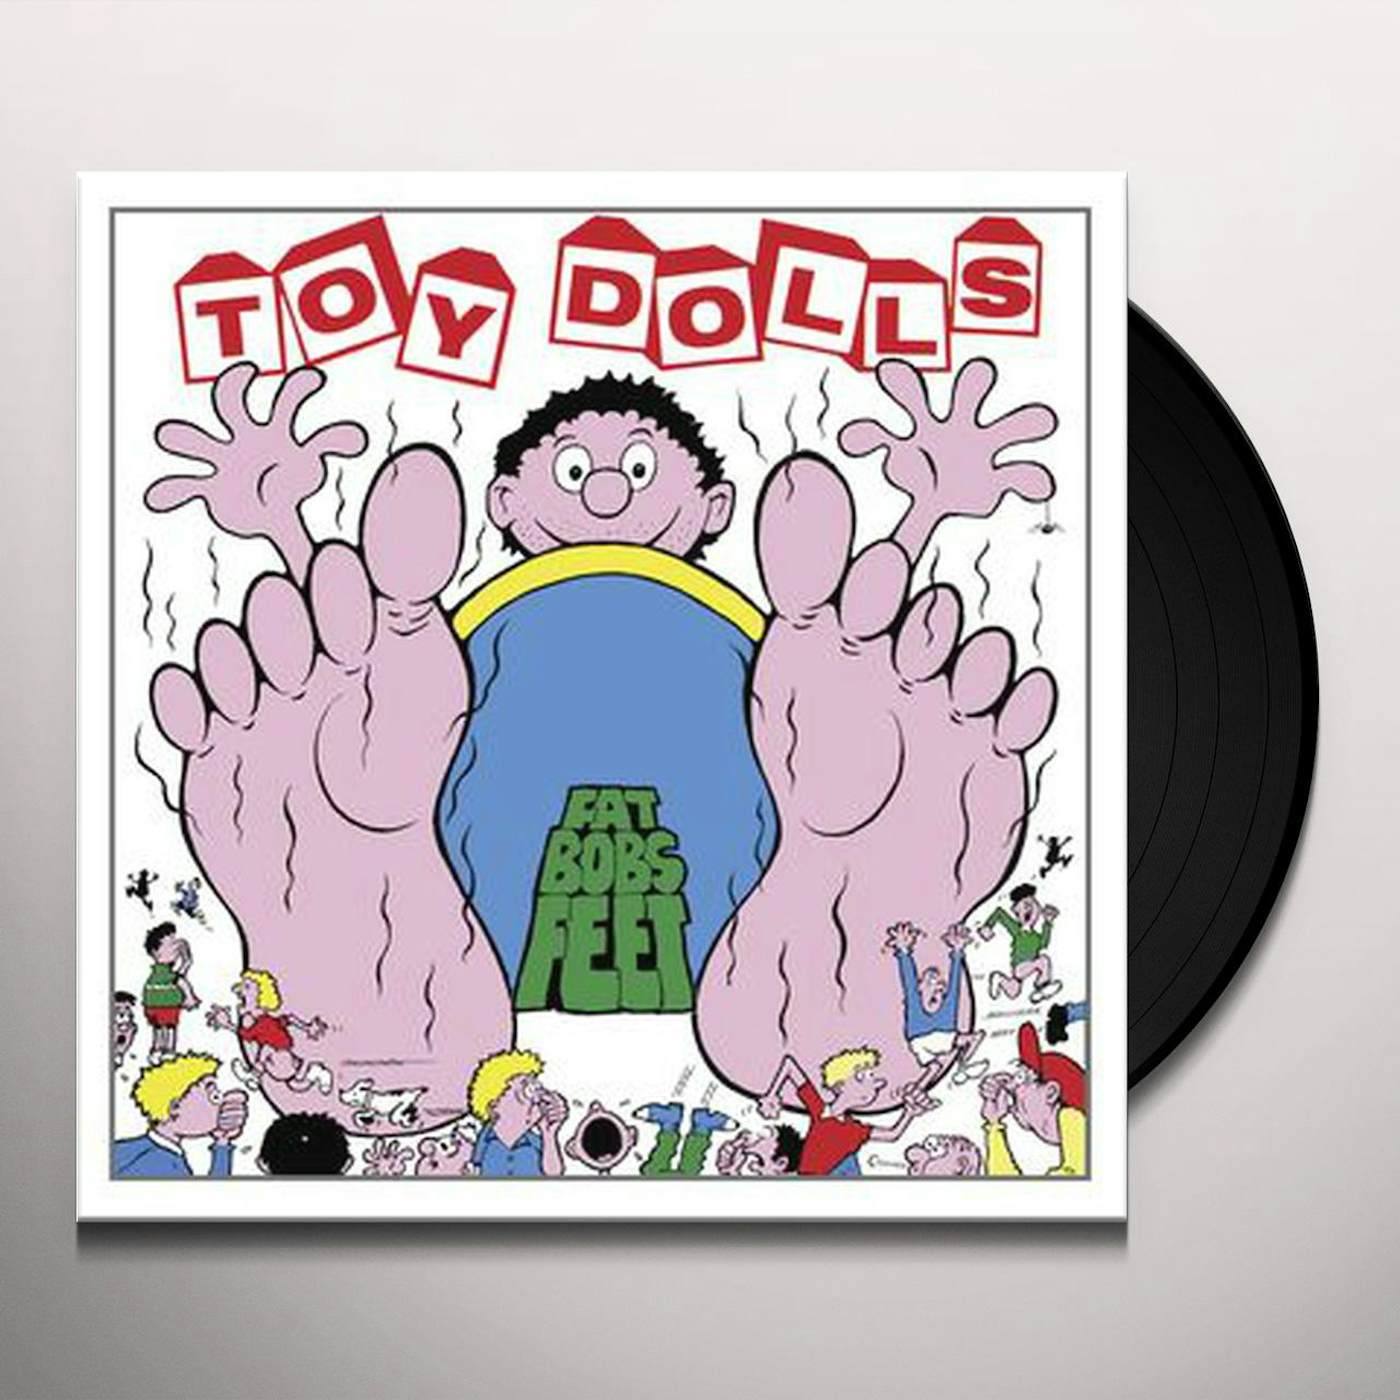 The Toy Dolls FAT BOBS FEET Vinyl Record